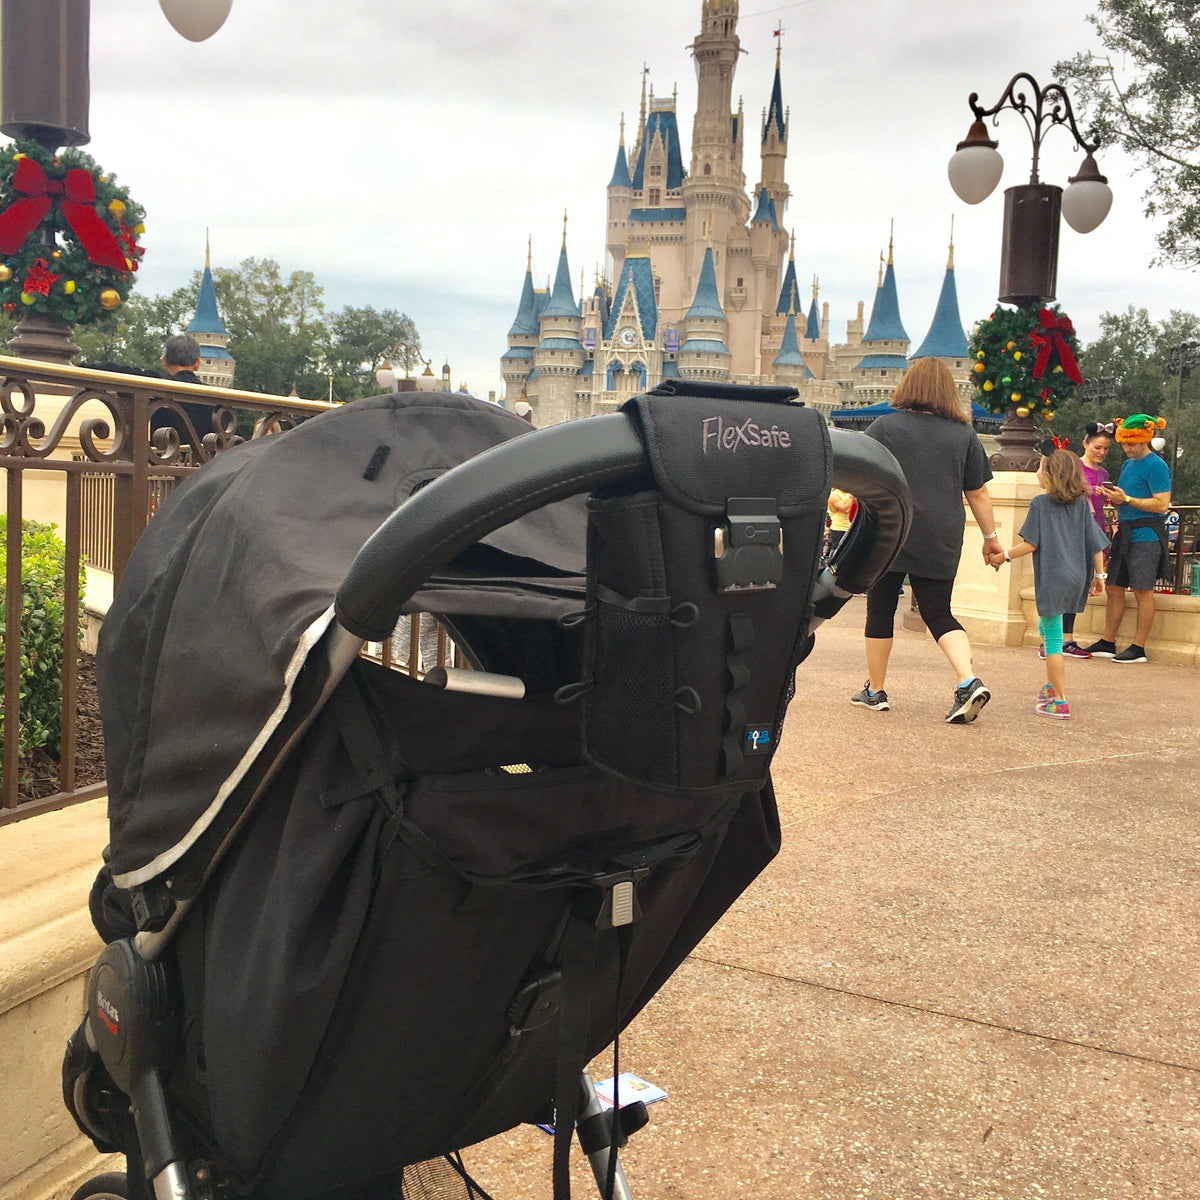 The Portable Travel Safe On Stroller at Disney Land